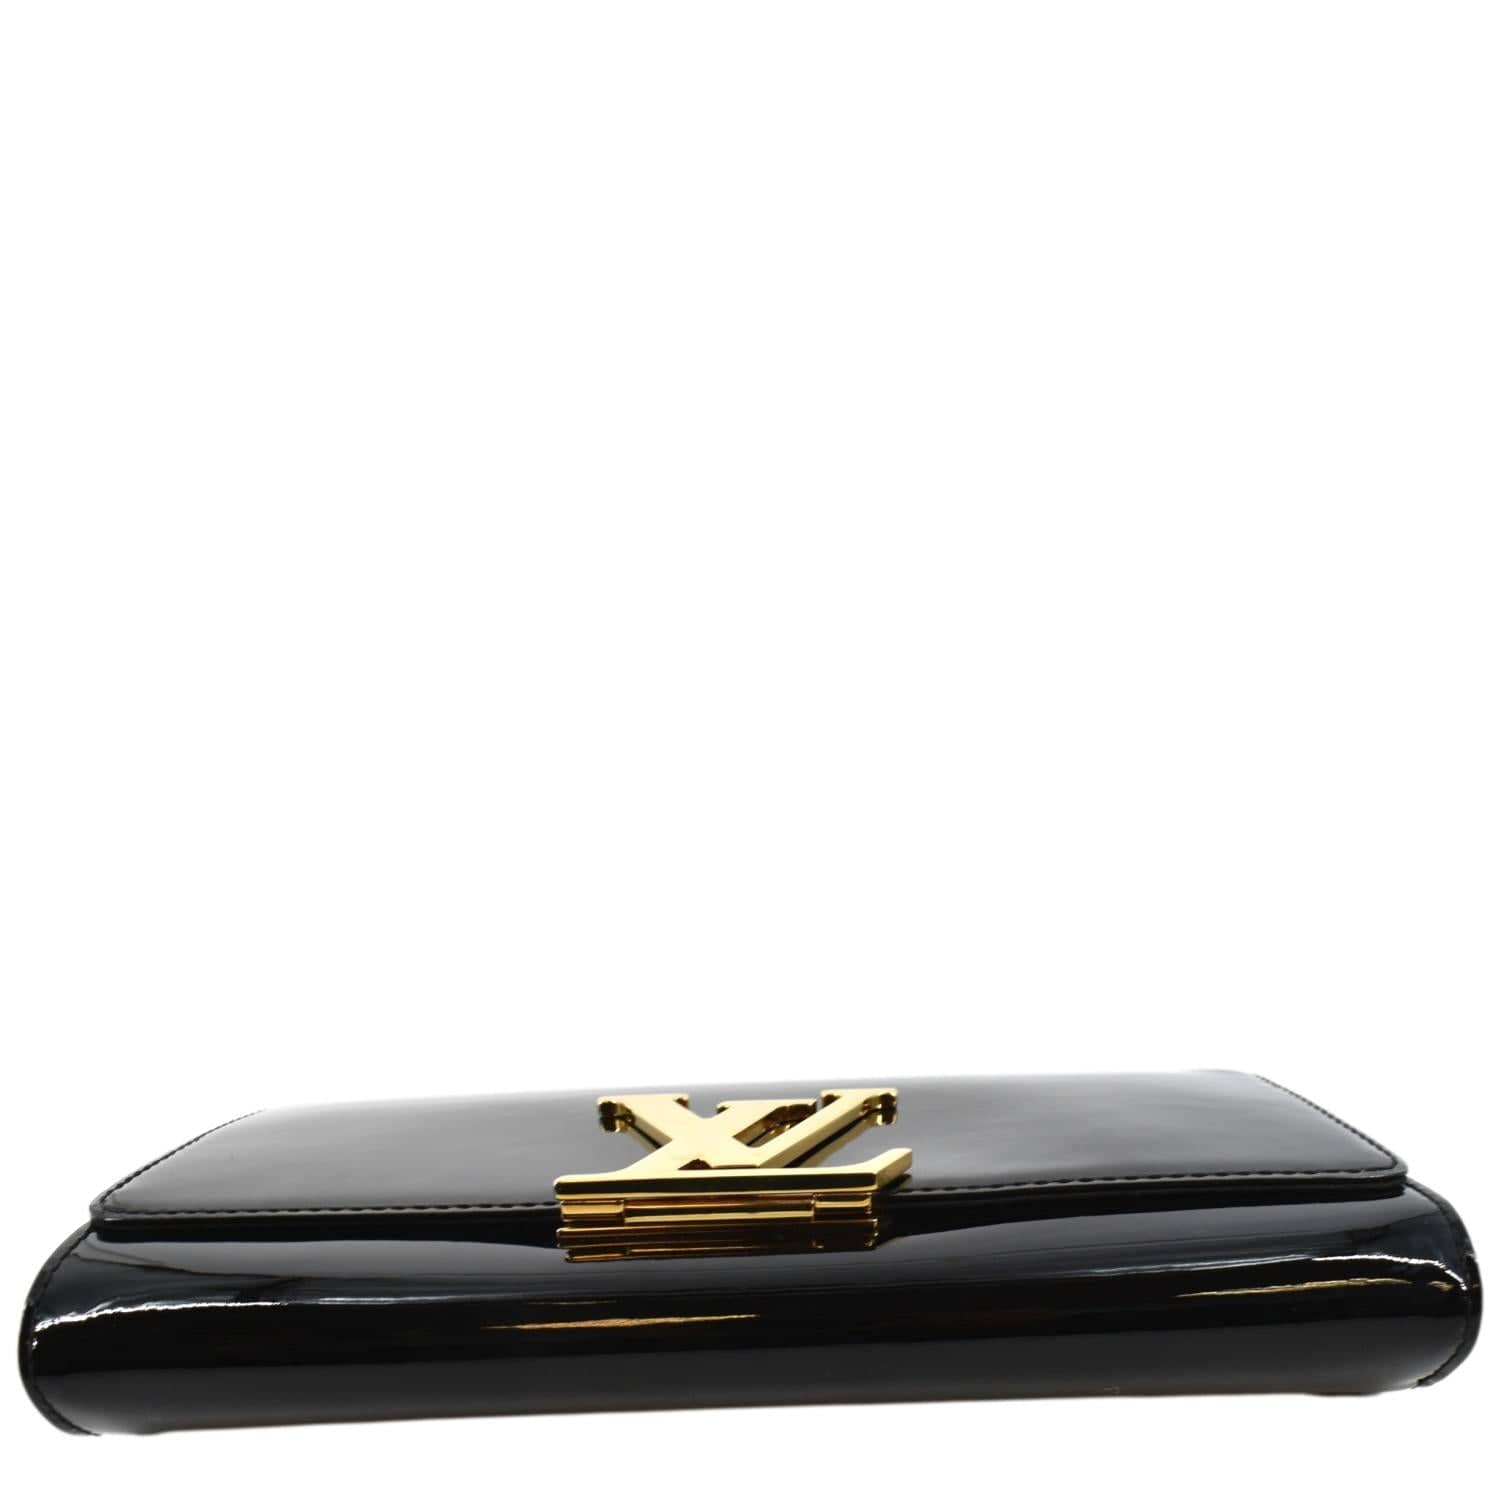 Louis Vuitton Wallet Dust Bag, 9x5-Inch – Vanessa Jane